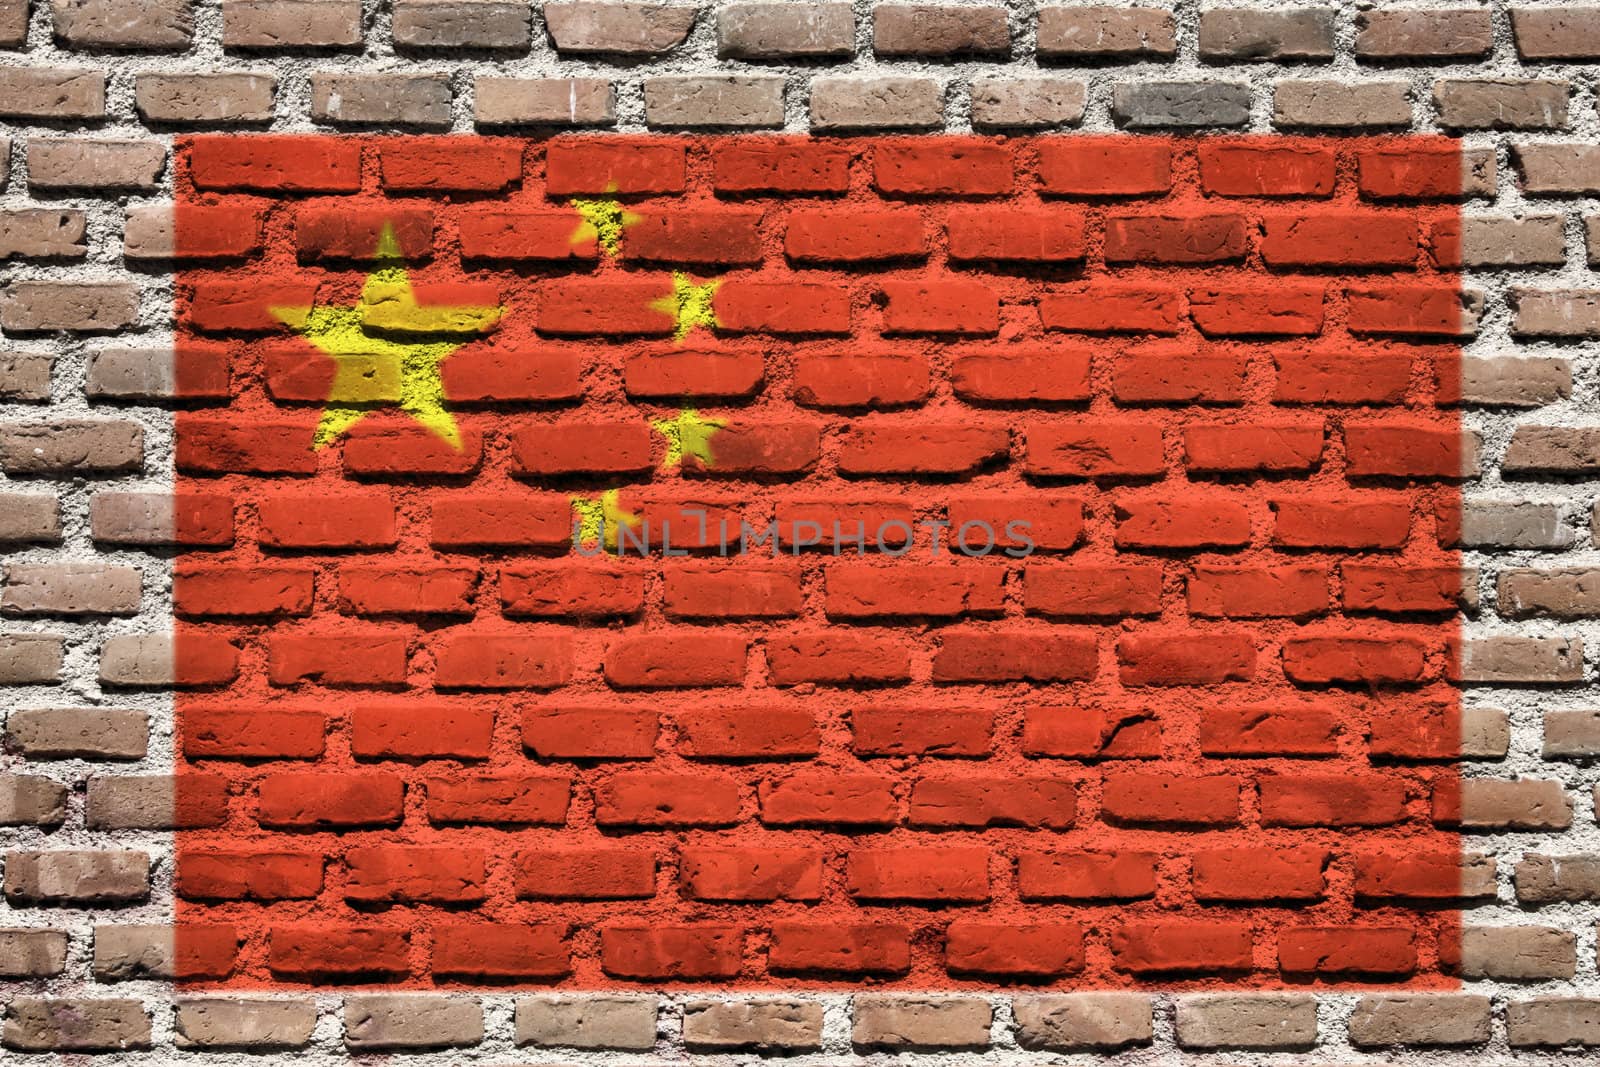 China national flag spray painted on a brick wall. Grunge graffiti.